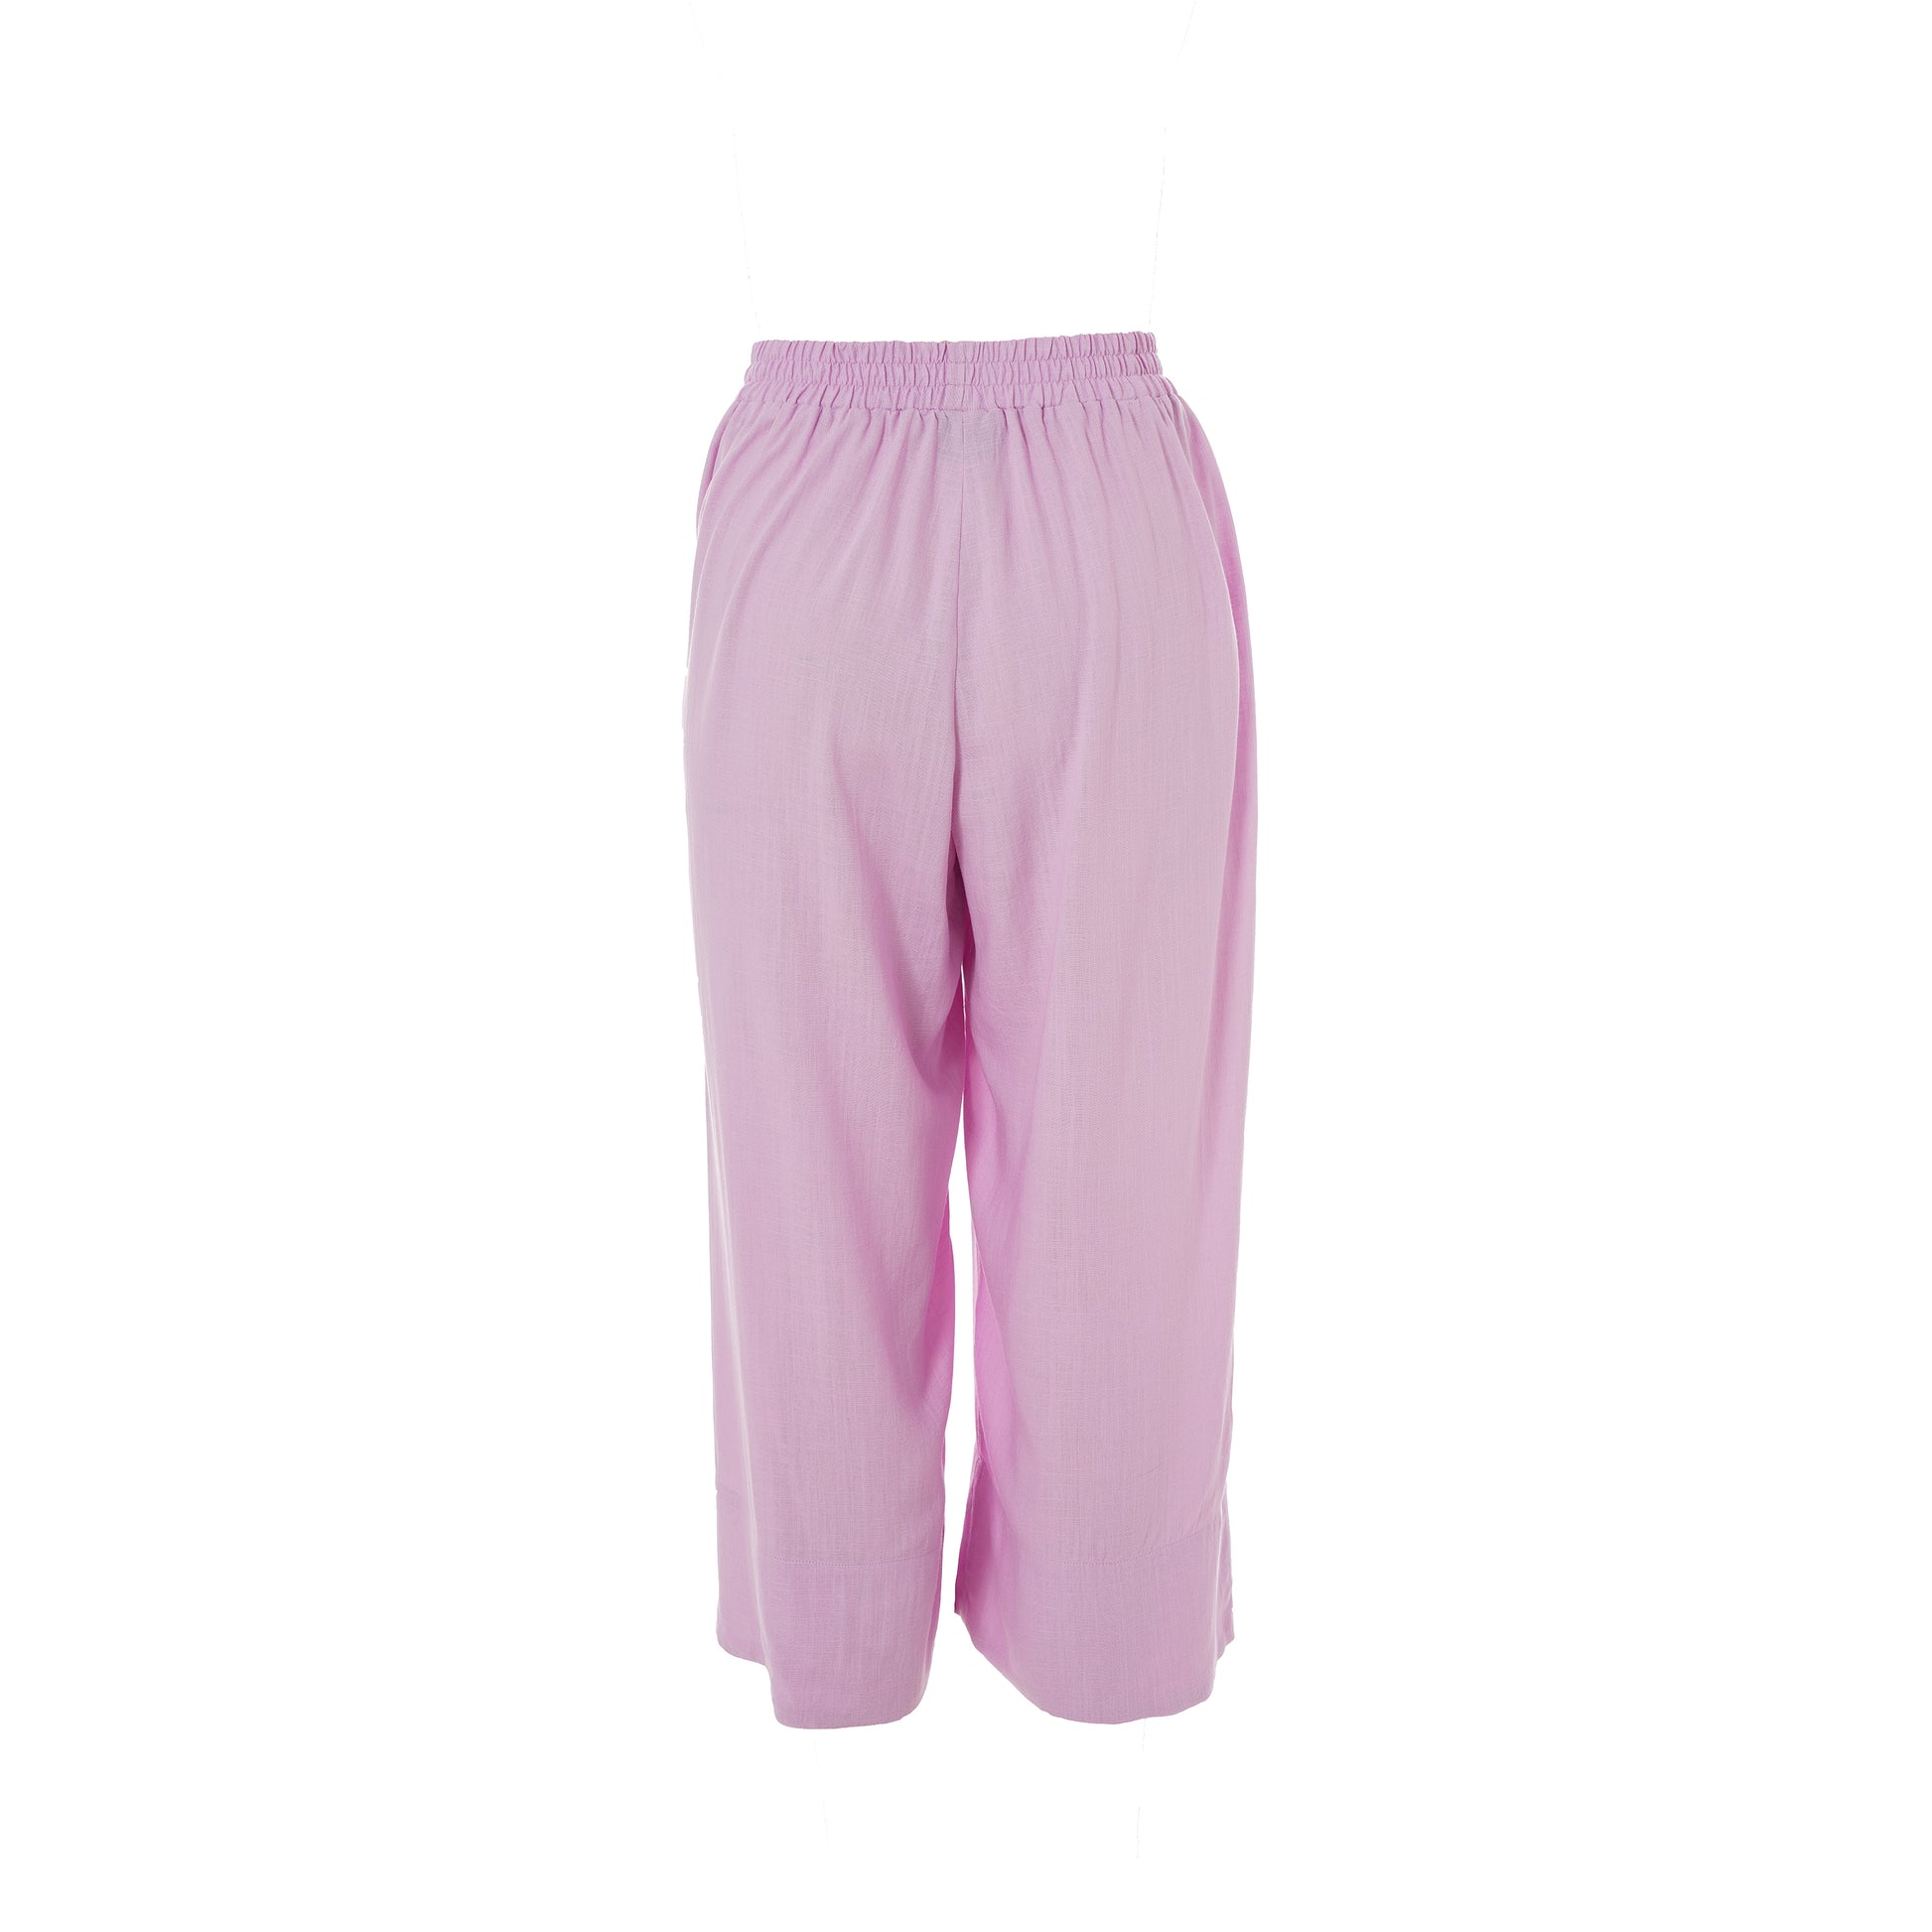 Gozzip Woman Karina Loose 3/4 pants - FLERE FARVER 3/4 Loose Pant Pink Lavendel